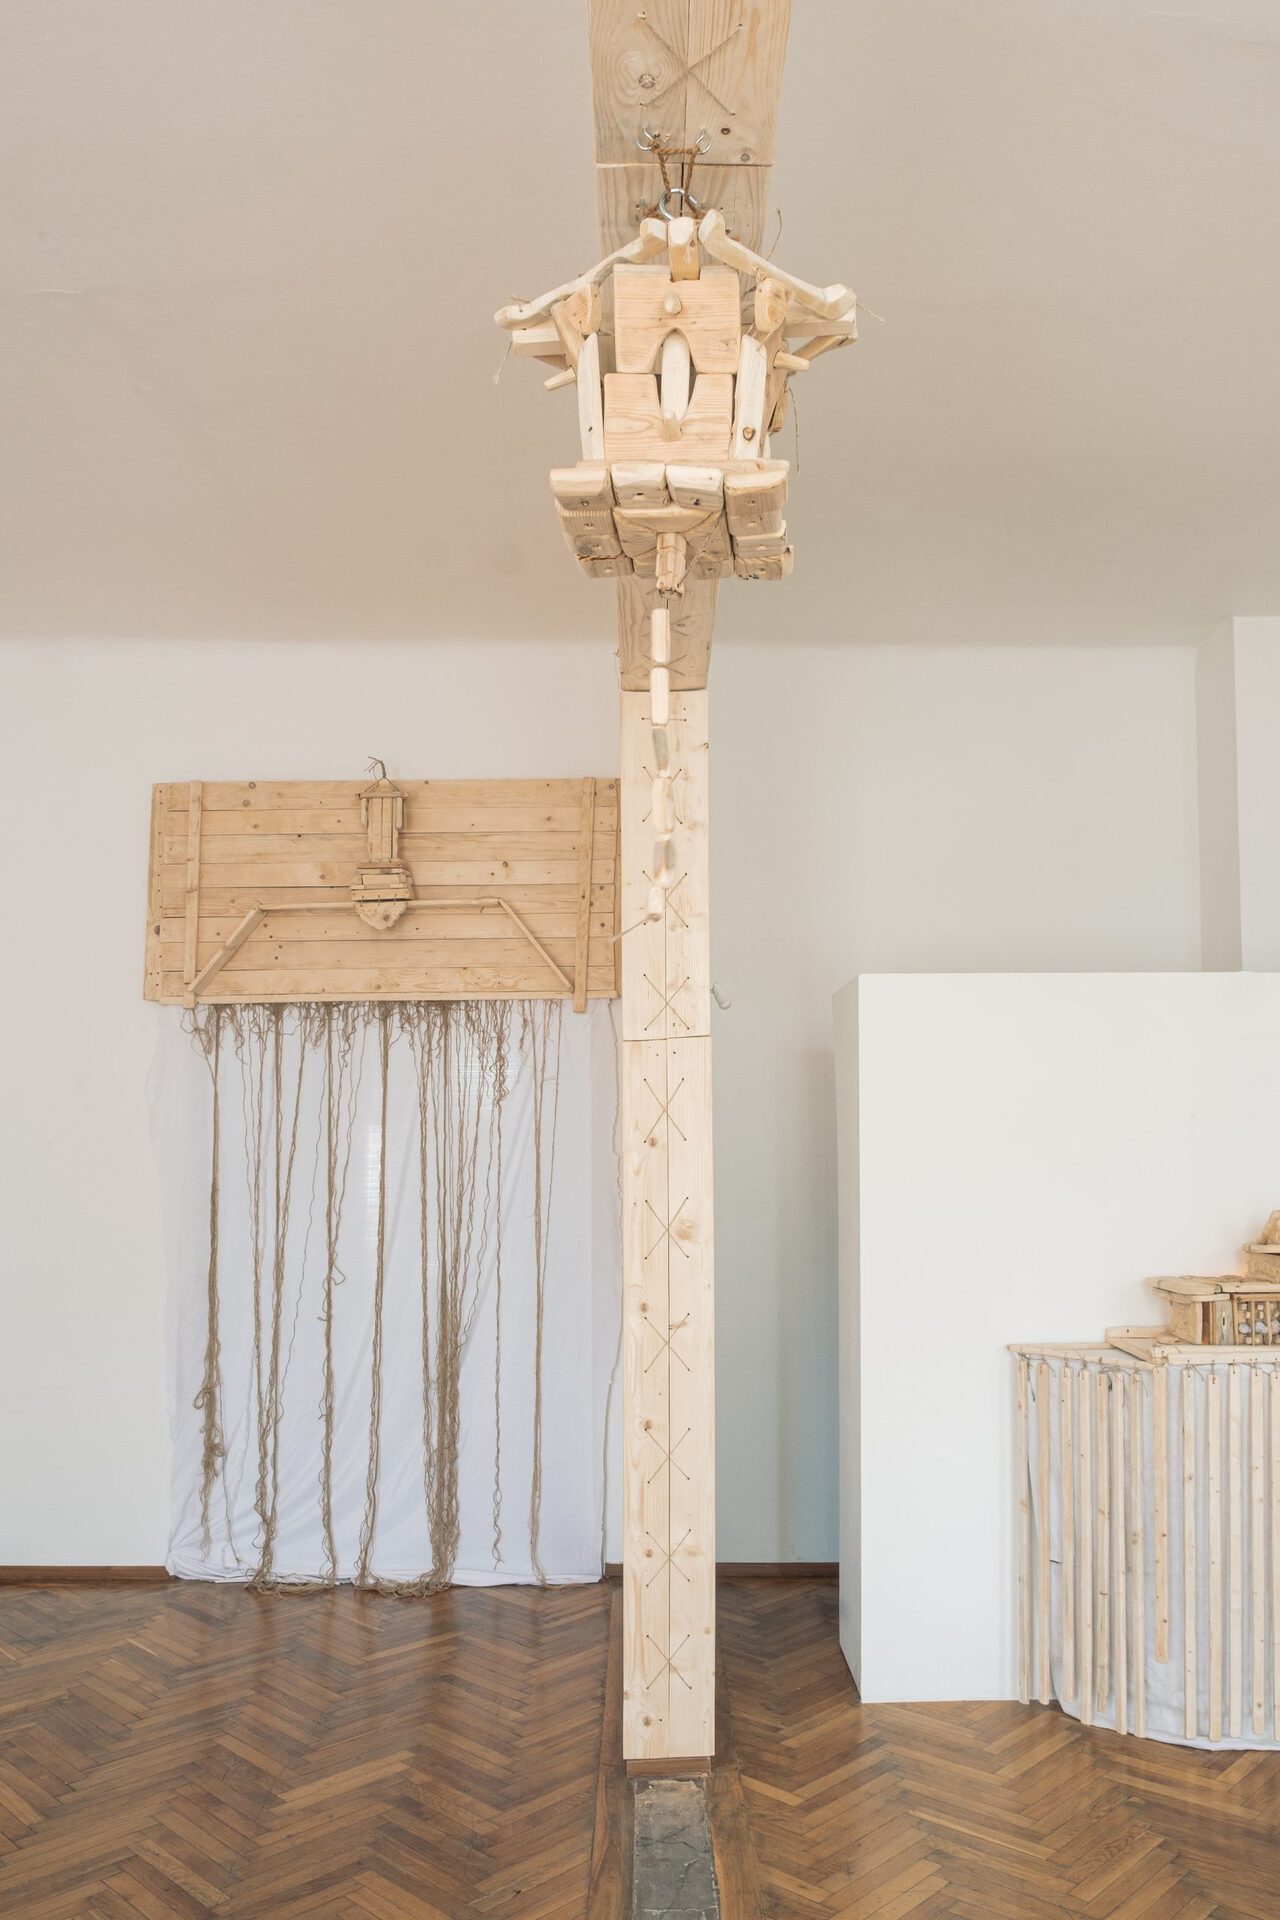 KANREC SAKUL, SUNSHINE,wood object, 2020